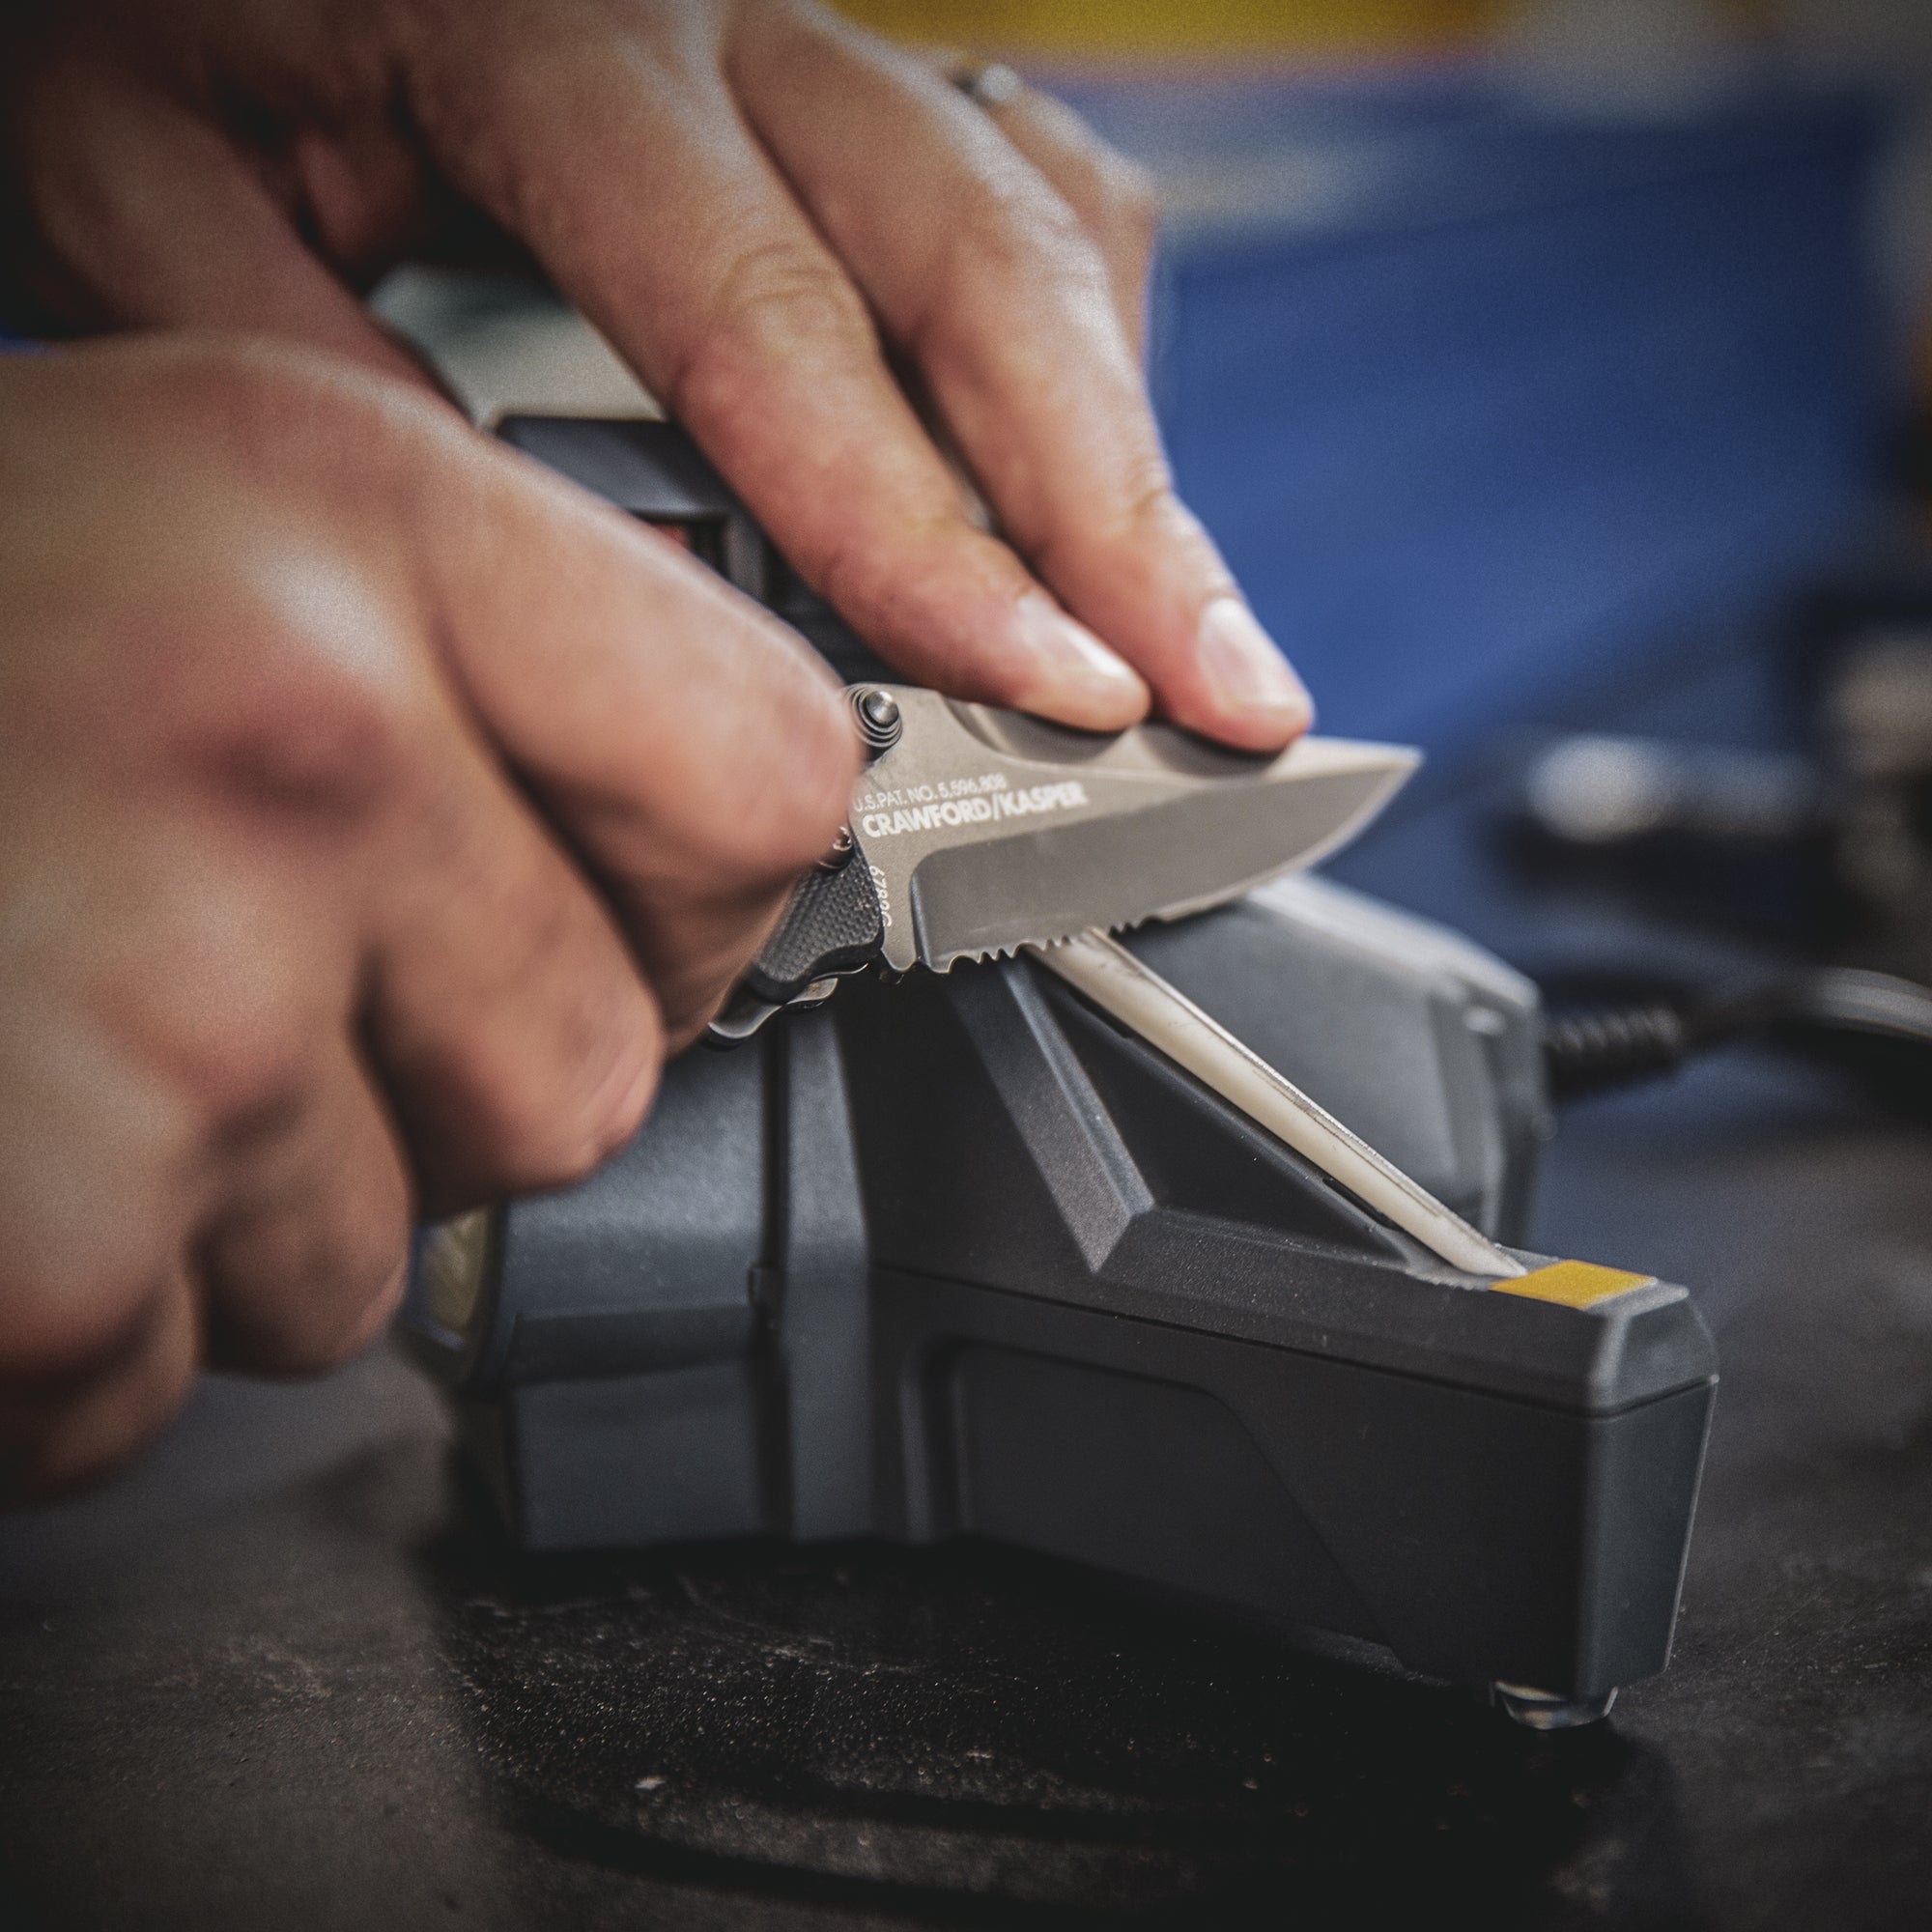 How to Sharpen a Serrated Knife - Work Sharp Sharpeners